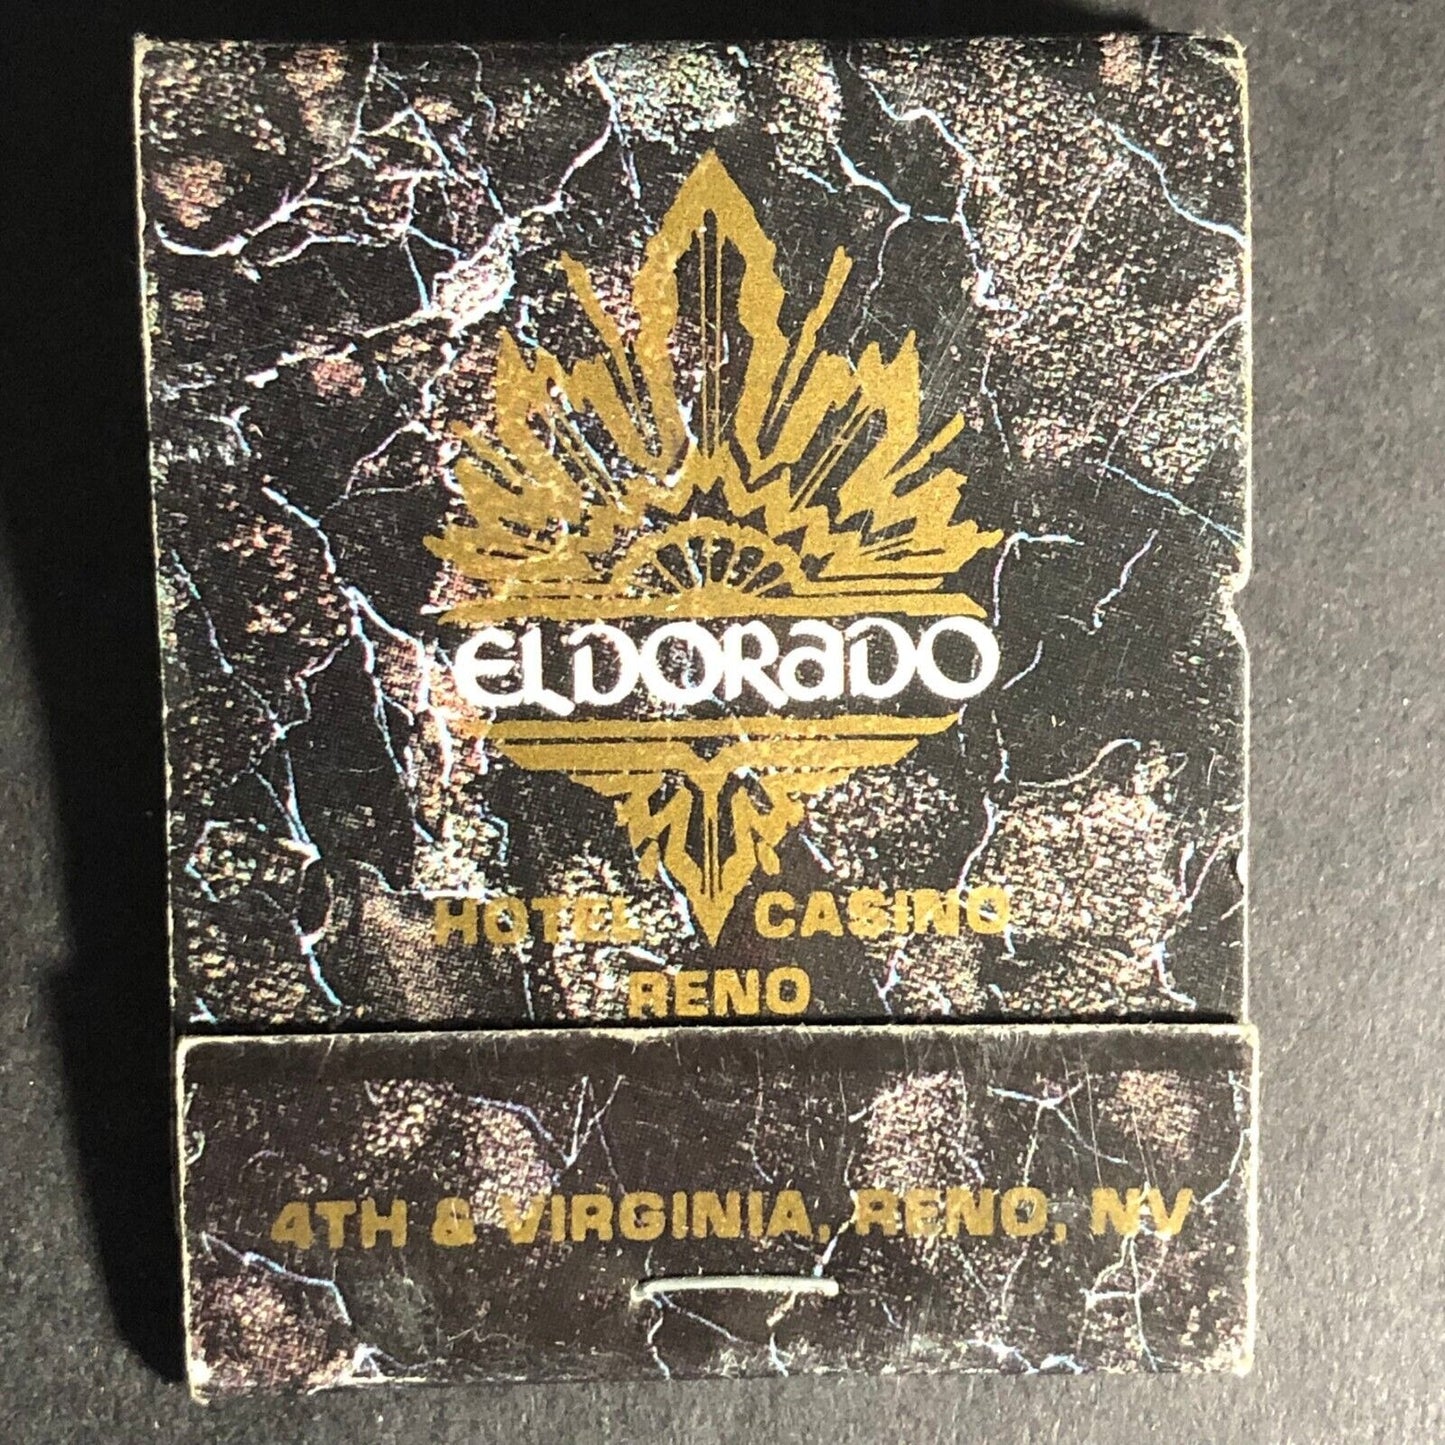 Eldorado Hotel Casino Reno 20-Strike Full Matchbook c1989 VGC